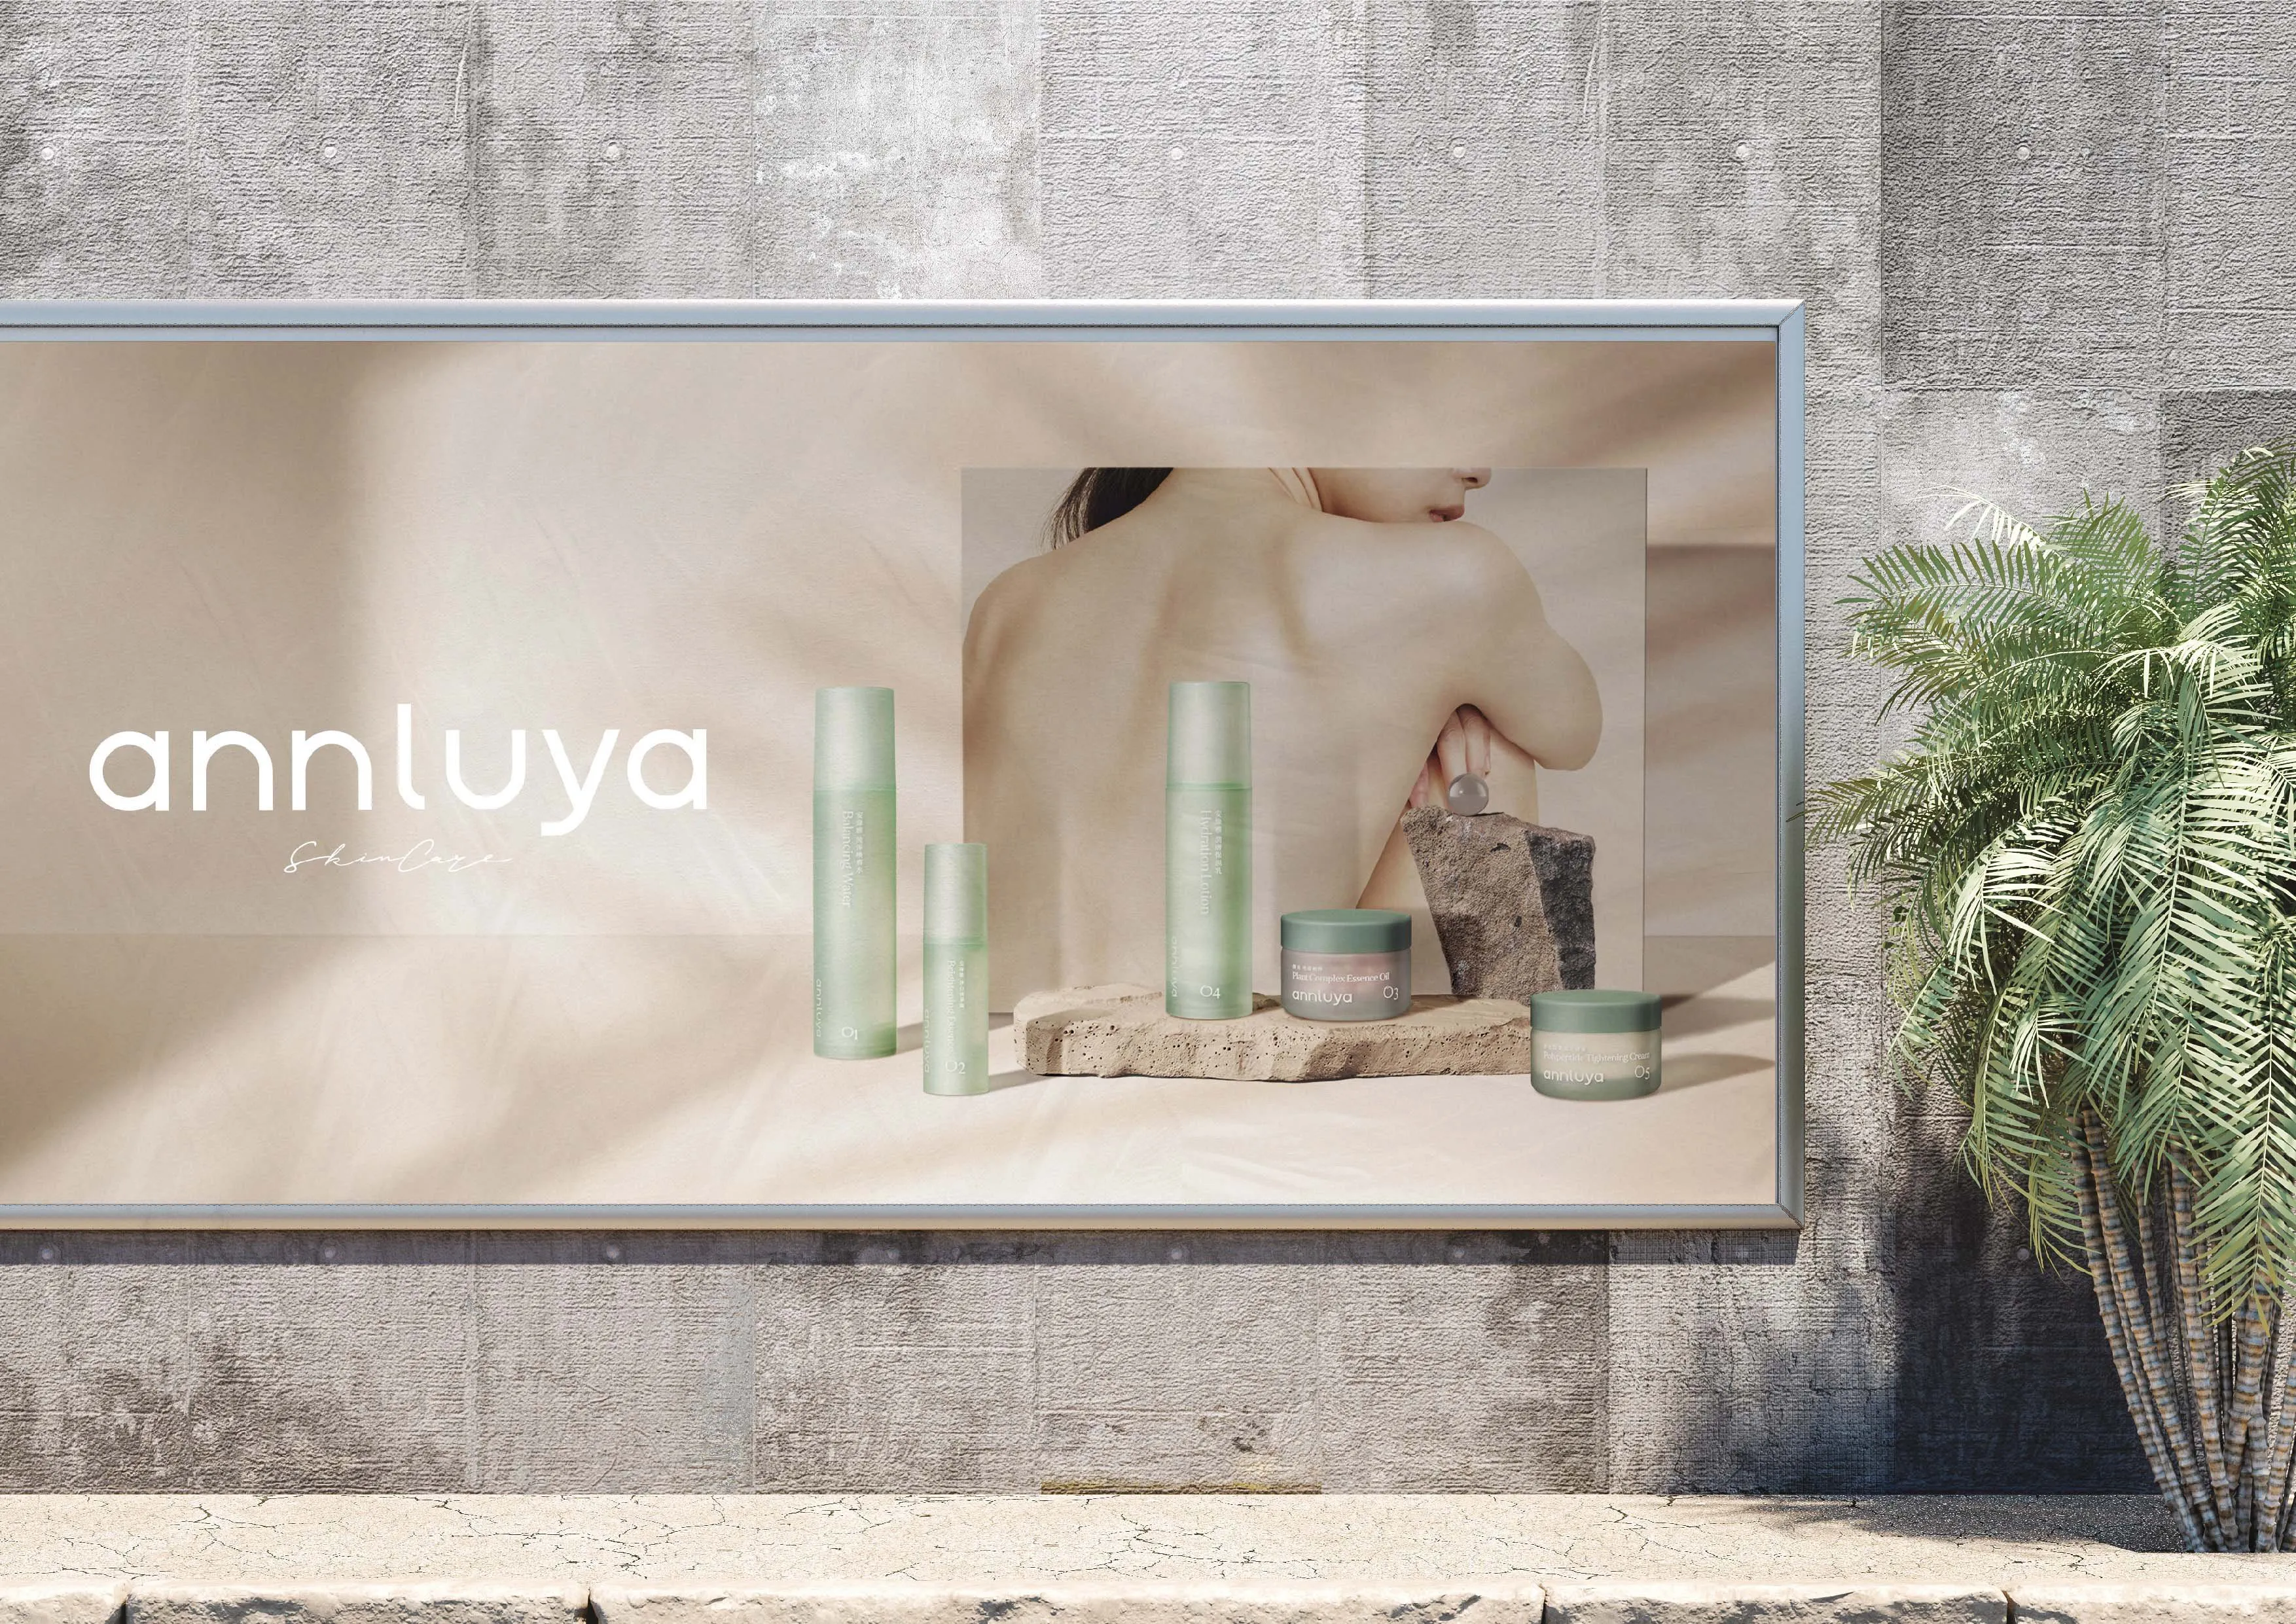 annluya 安綠雅 品牌視覺 攝影計畫 包裝設計